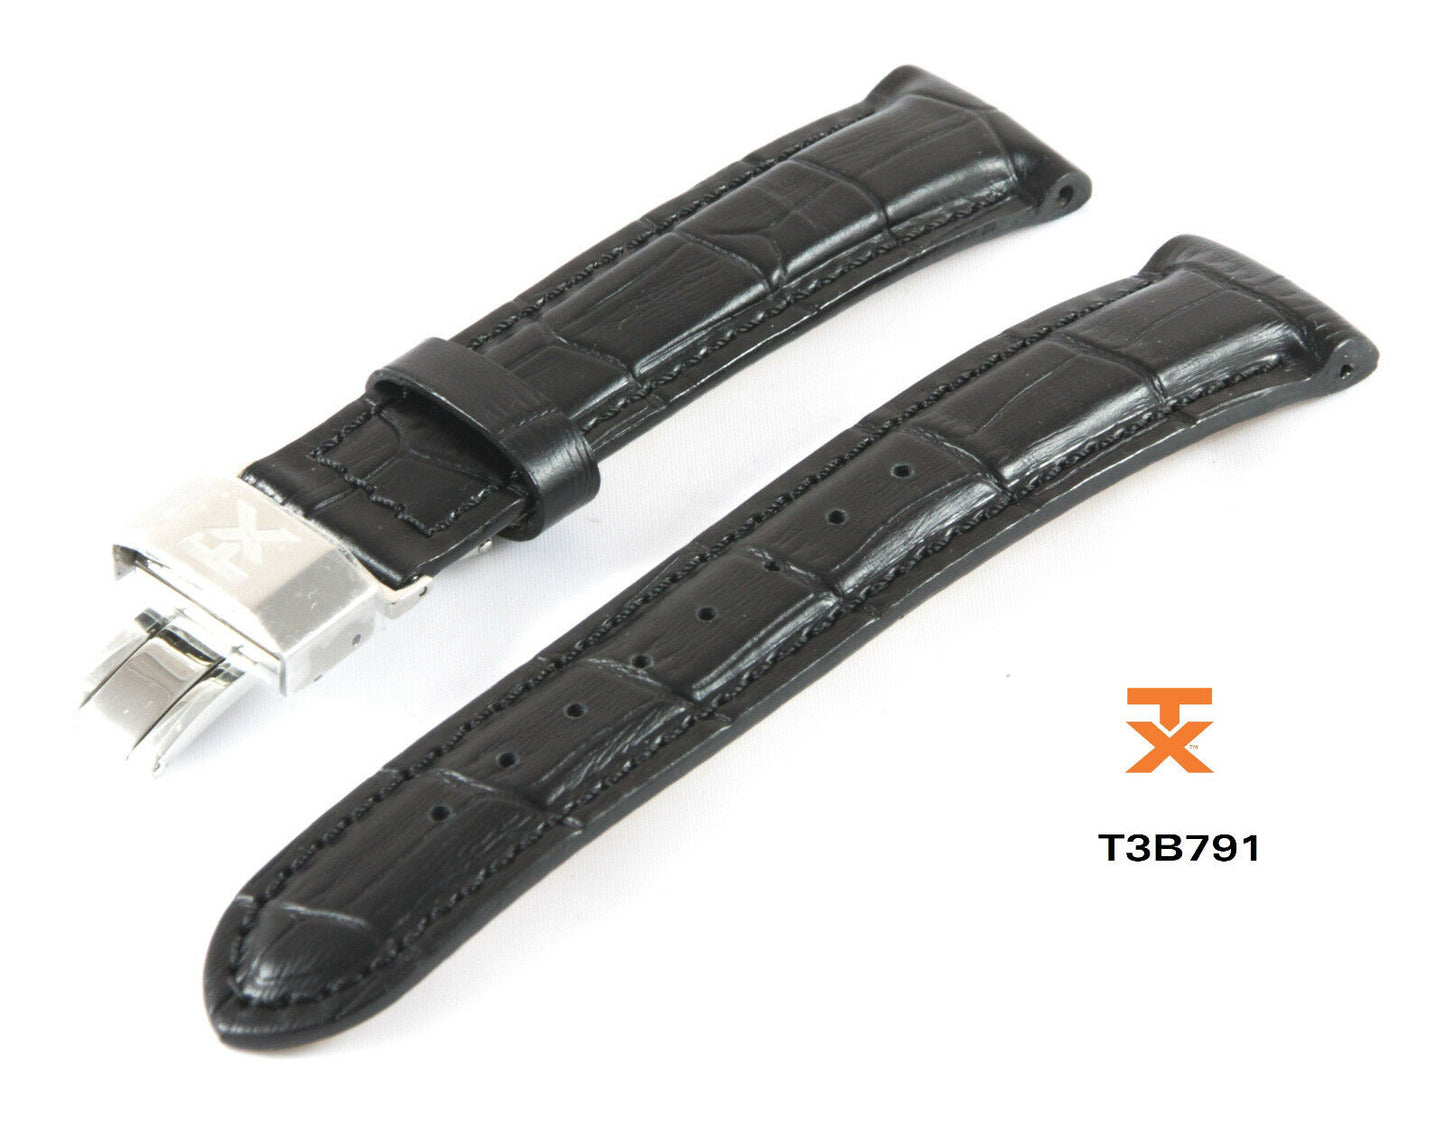 Timex TX Ersatzarmband T3B791 - TX 300 und TX 500 Series Ersatzband Leder 20mm